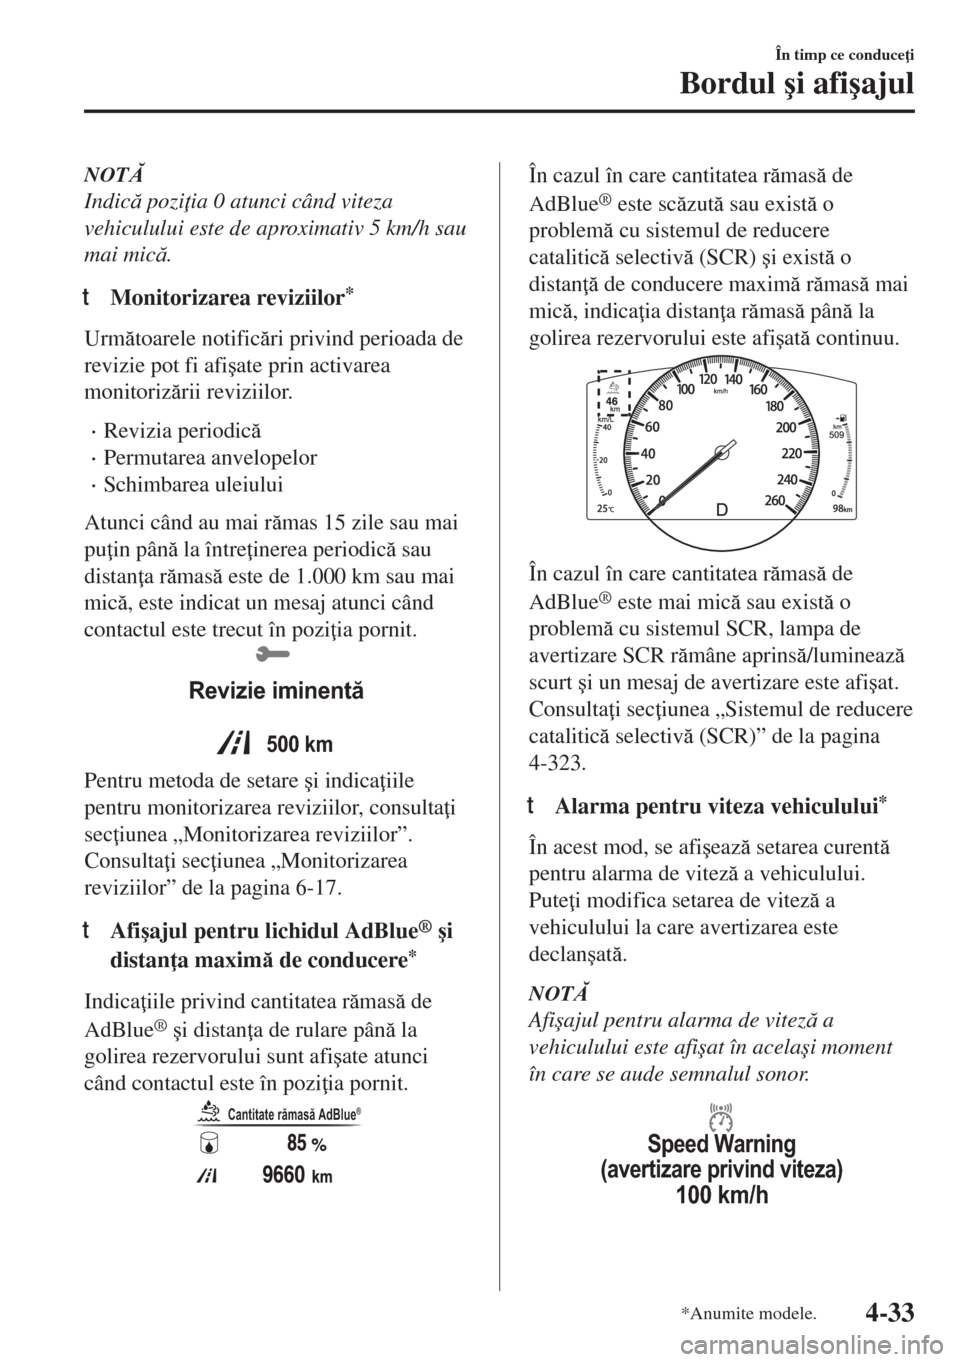 MAZDA MODEL 6 2018  Manualul de utilizare (in Romanian) NOT
Indic pozi ia 0 atunci când viteza
vehiculului este de aproximativ 5 km/h sau
mai mic.
tMonitorizarea reviziilor*
Urmtoarele notificri privind perioada de
revizie pot fi afi�úate prin